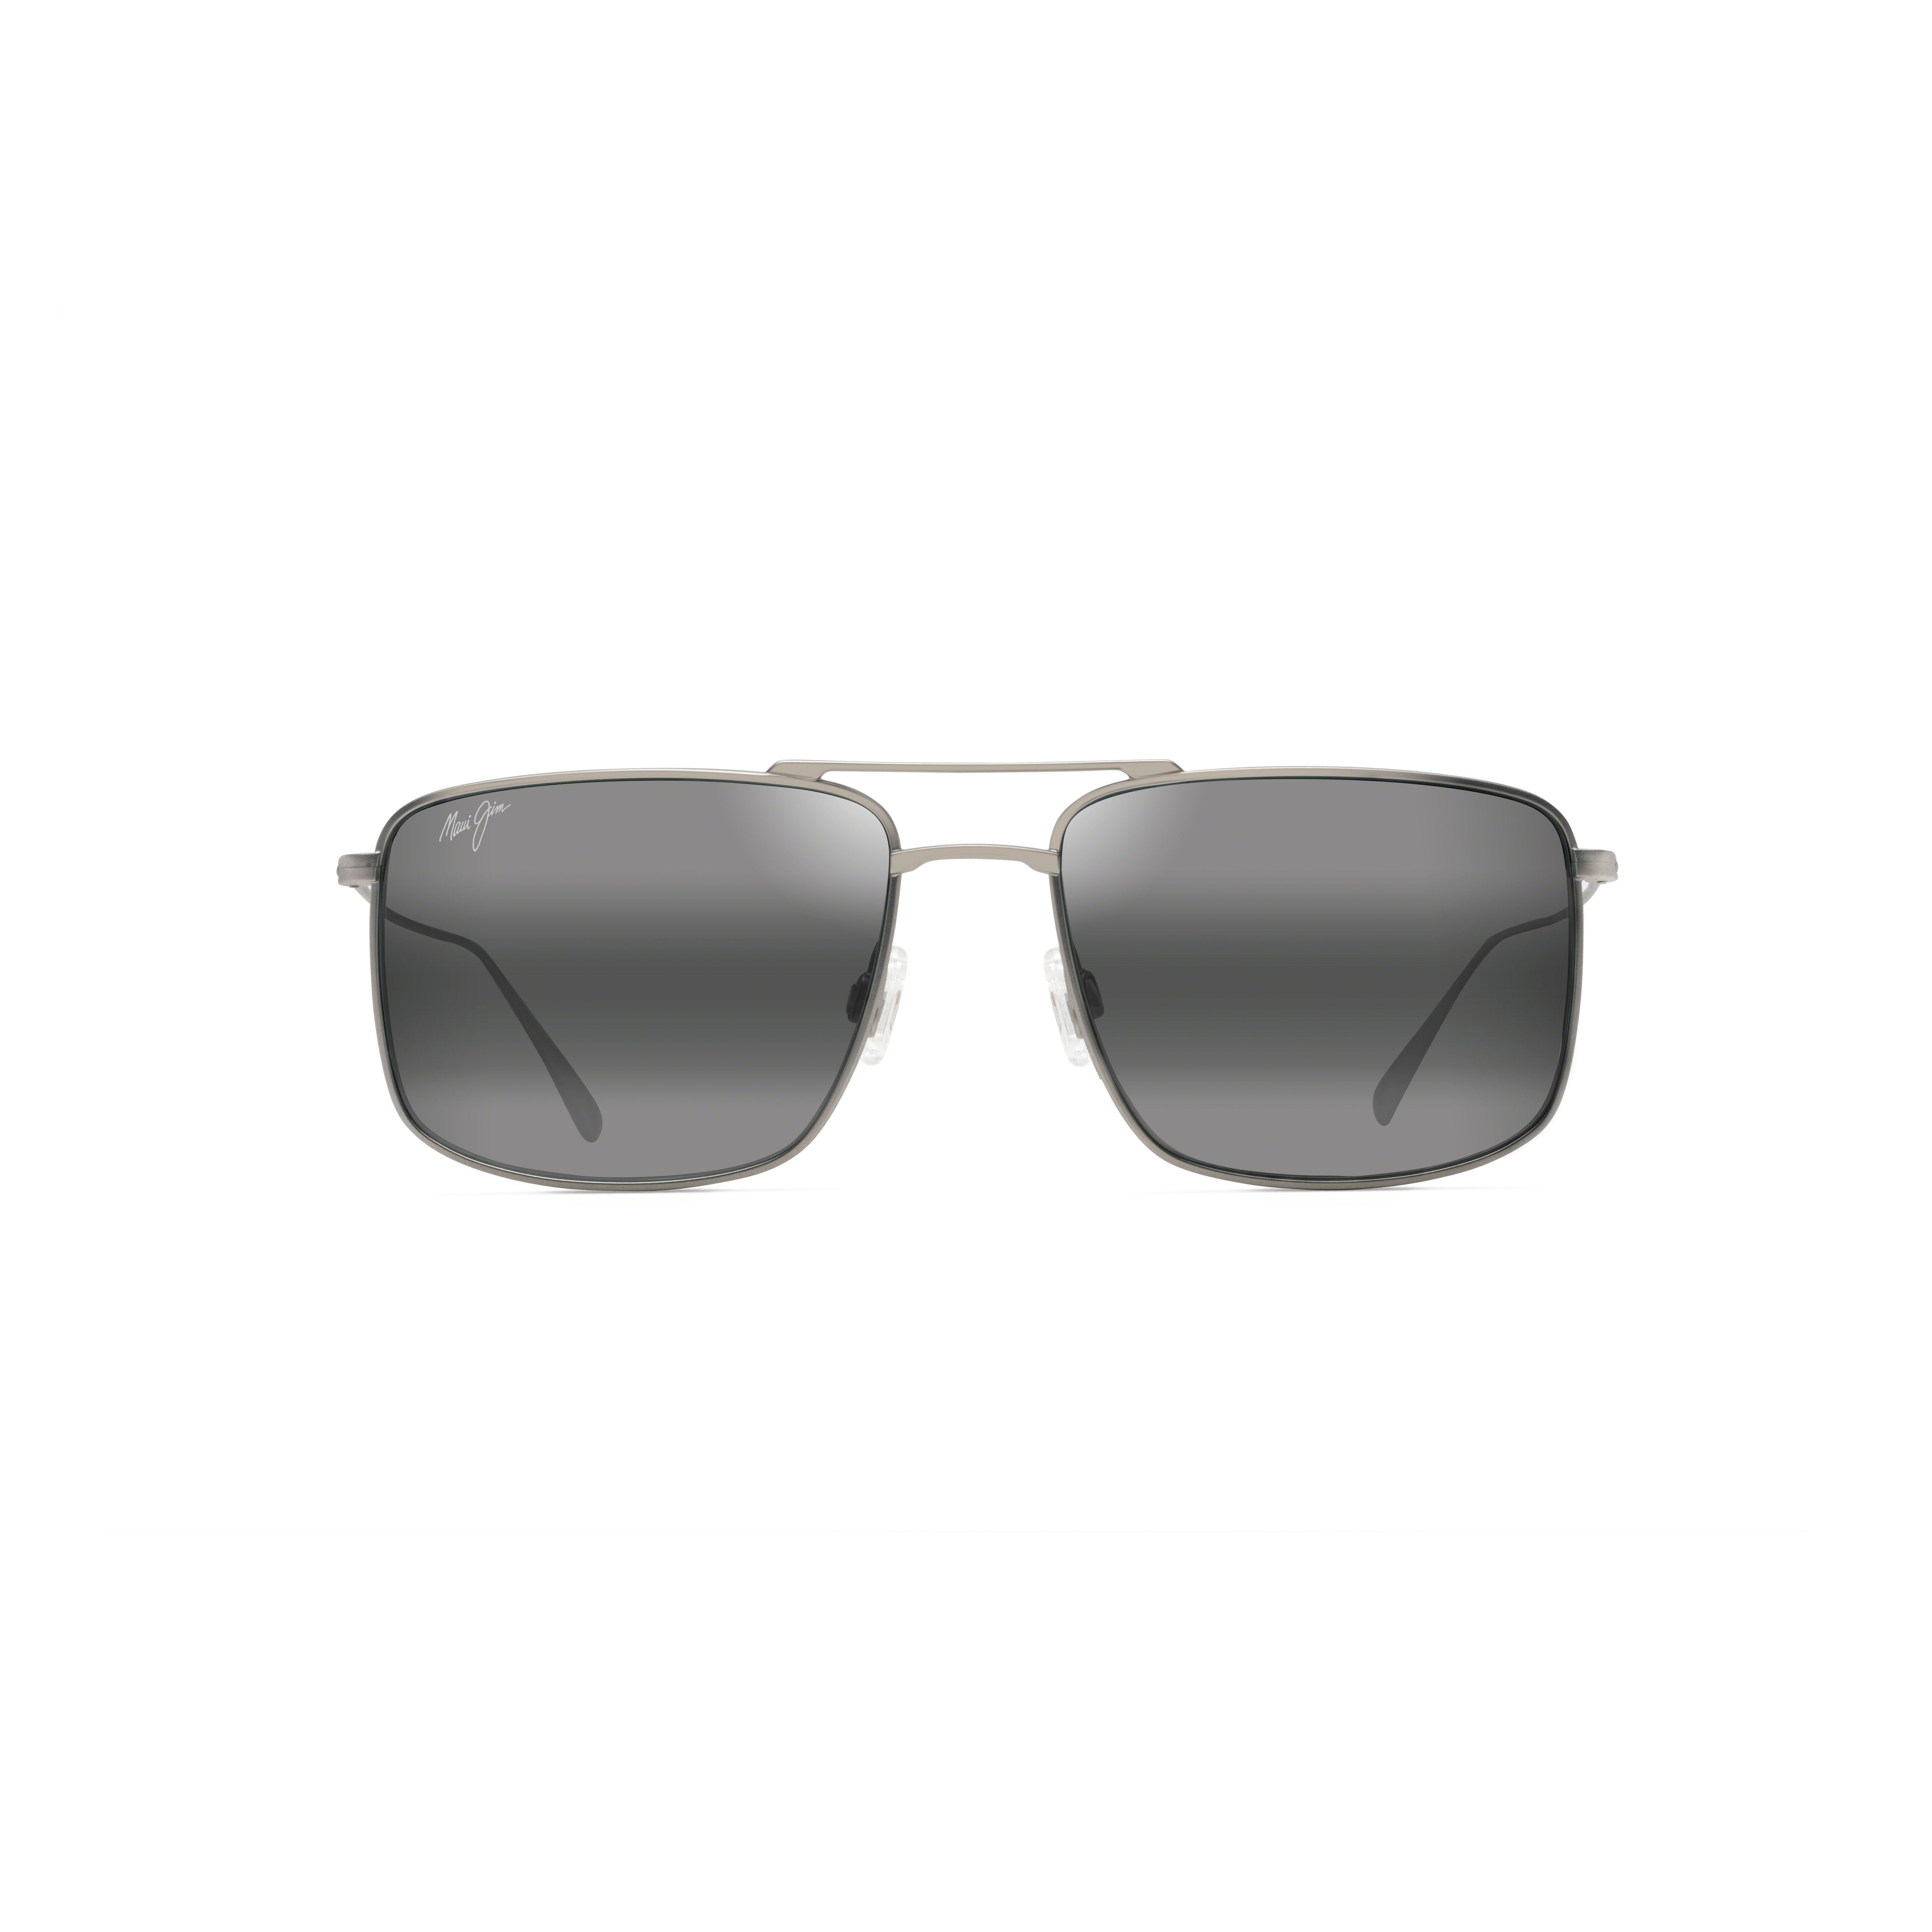 AEKO Square Sunglasses 17 - size 55